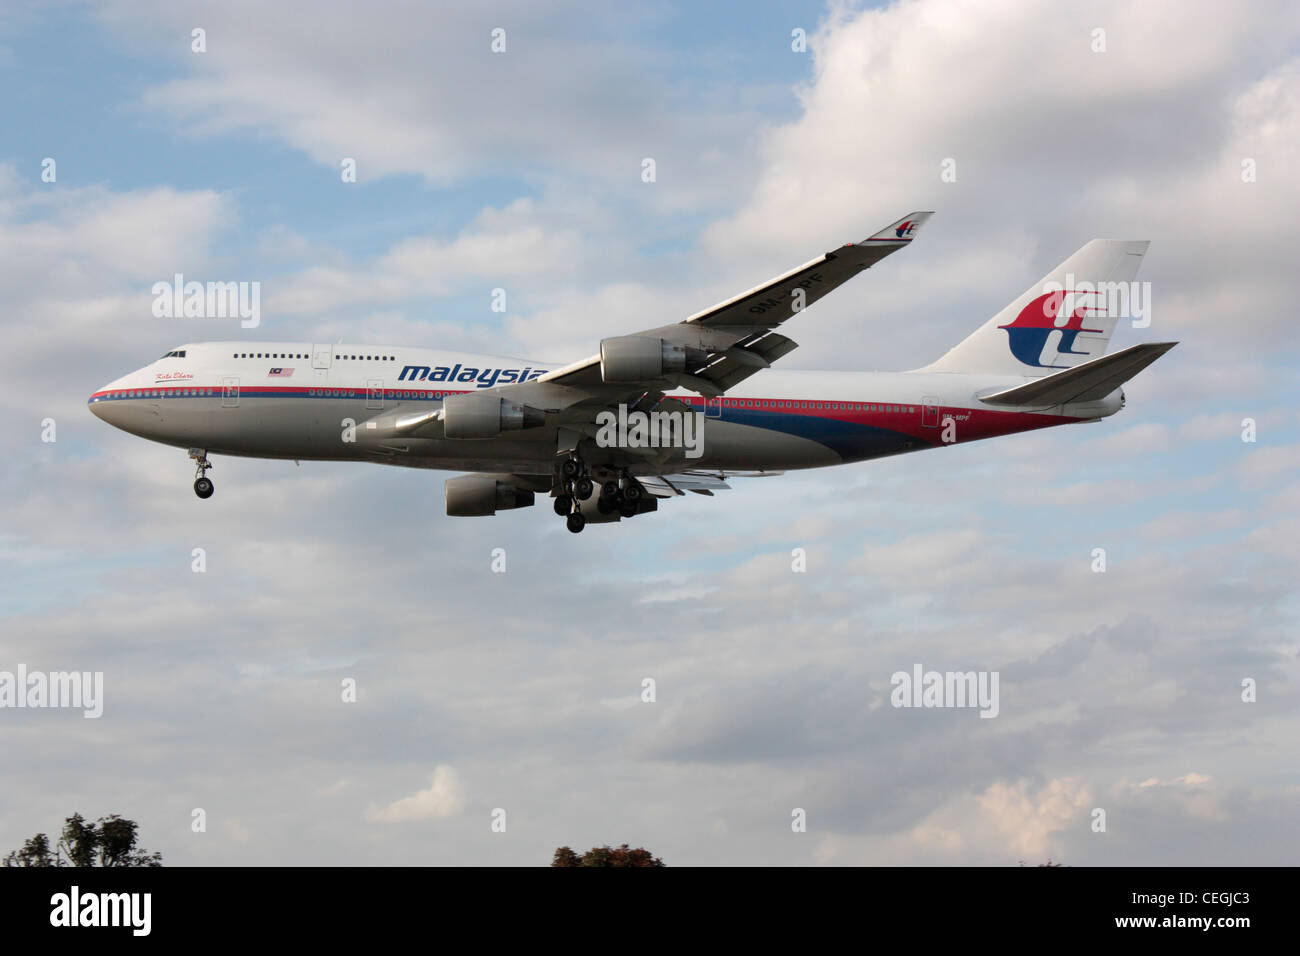 Malaysia Airlines Boeing 747-400 jumbo jet aereo di linea in arrivo a Londra Heathrow. Vista laterale. Foto Stock